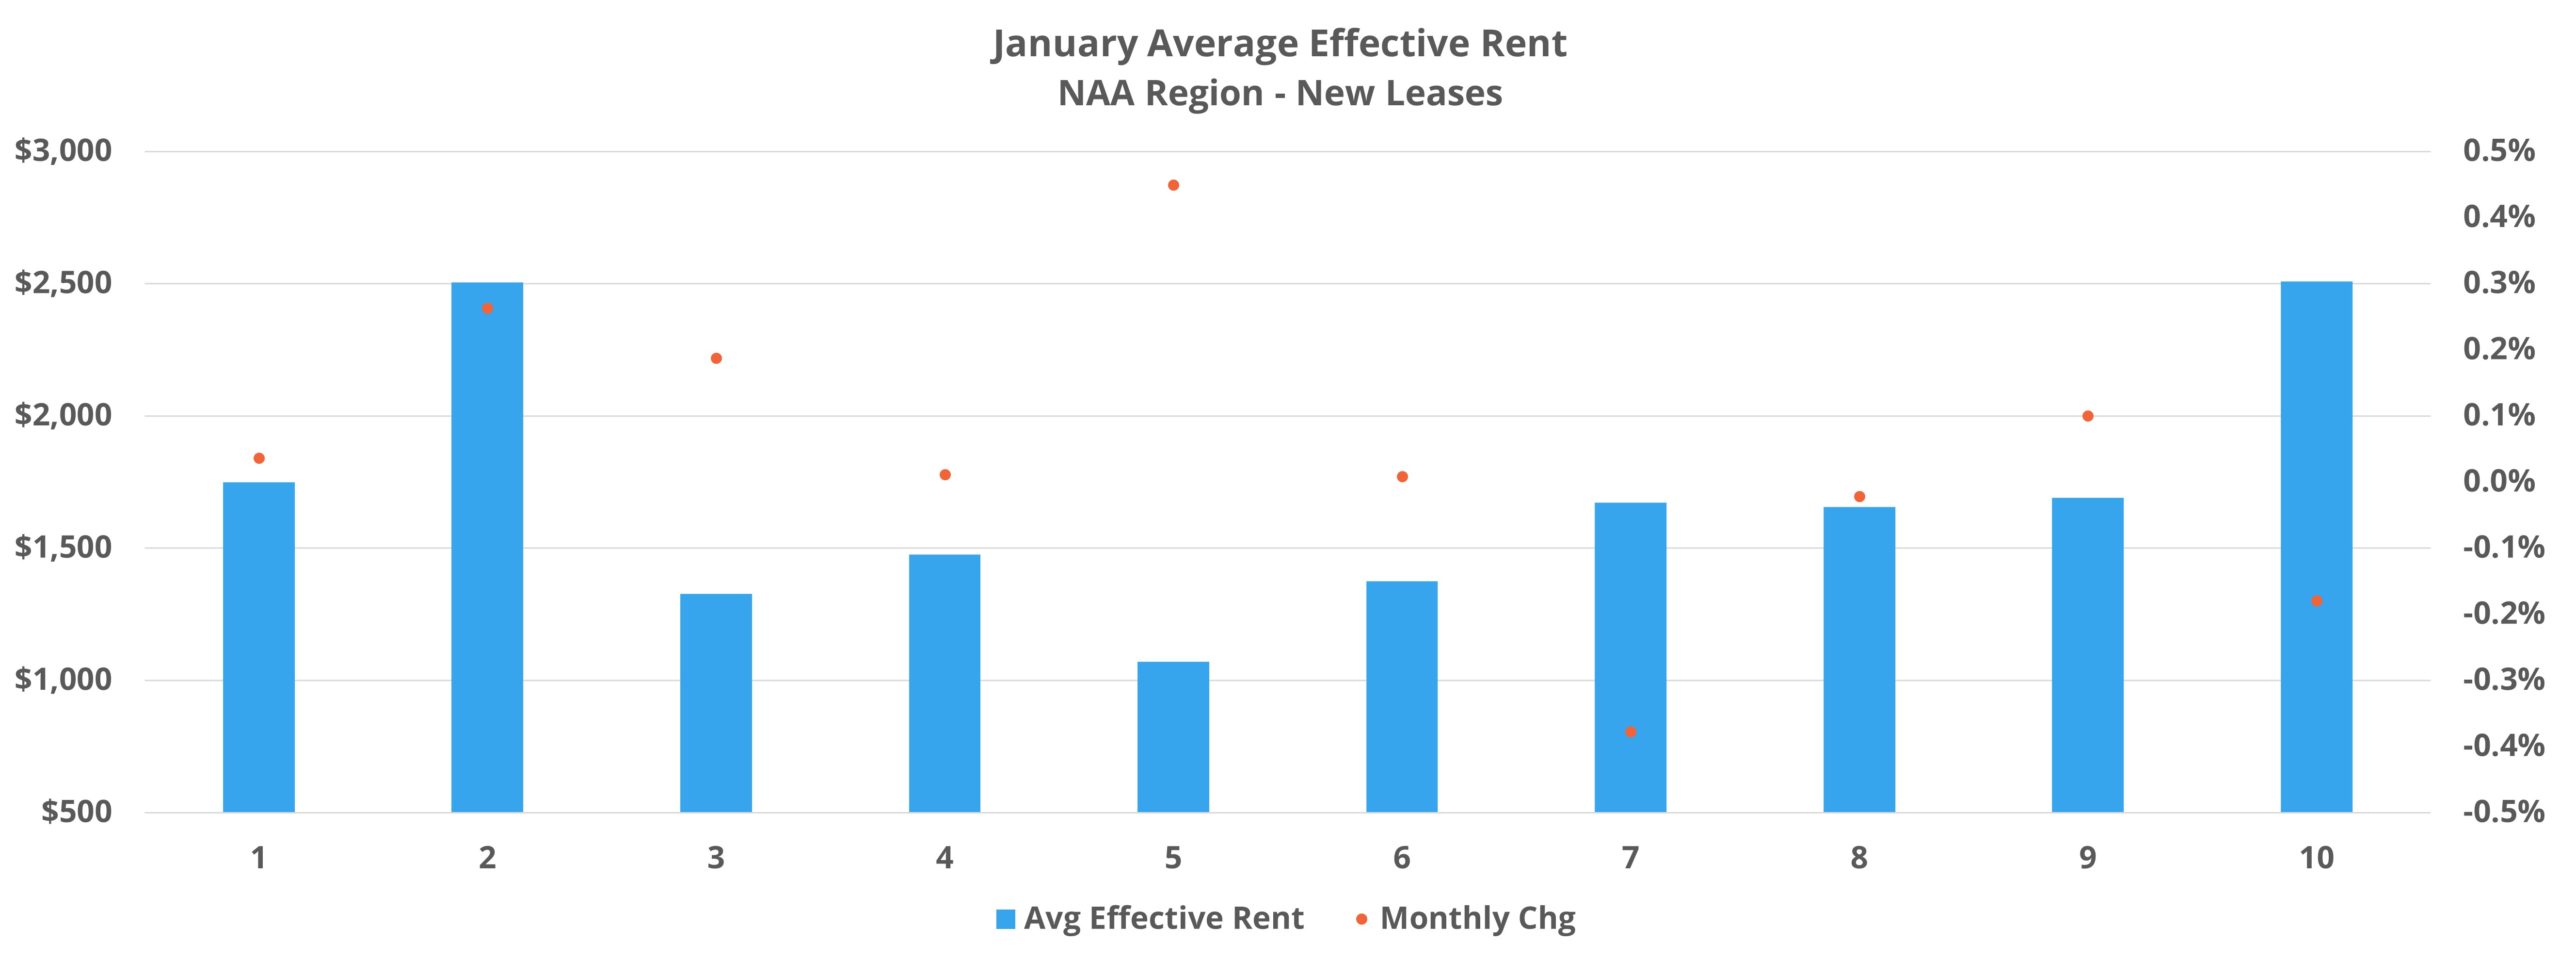 January Average Effective Rent